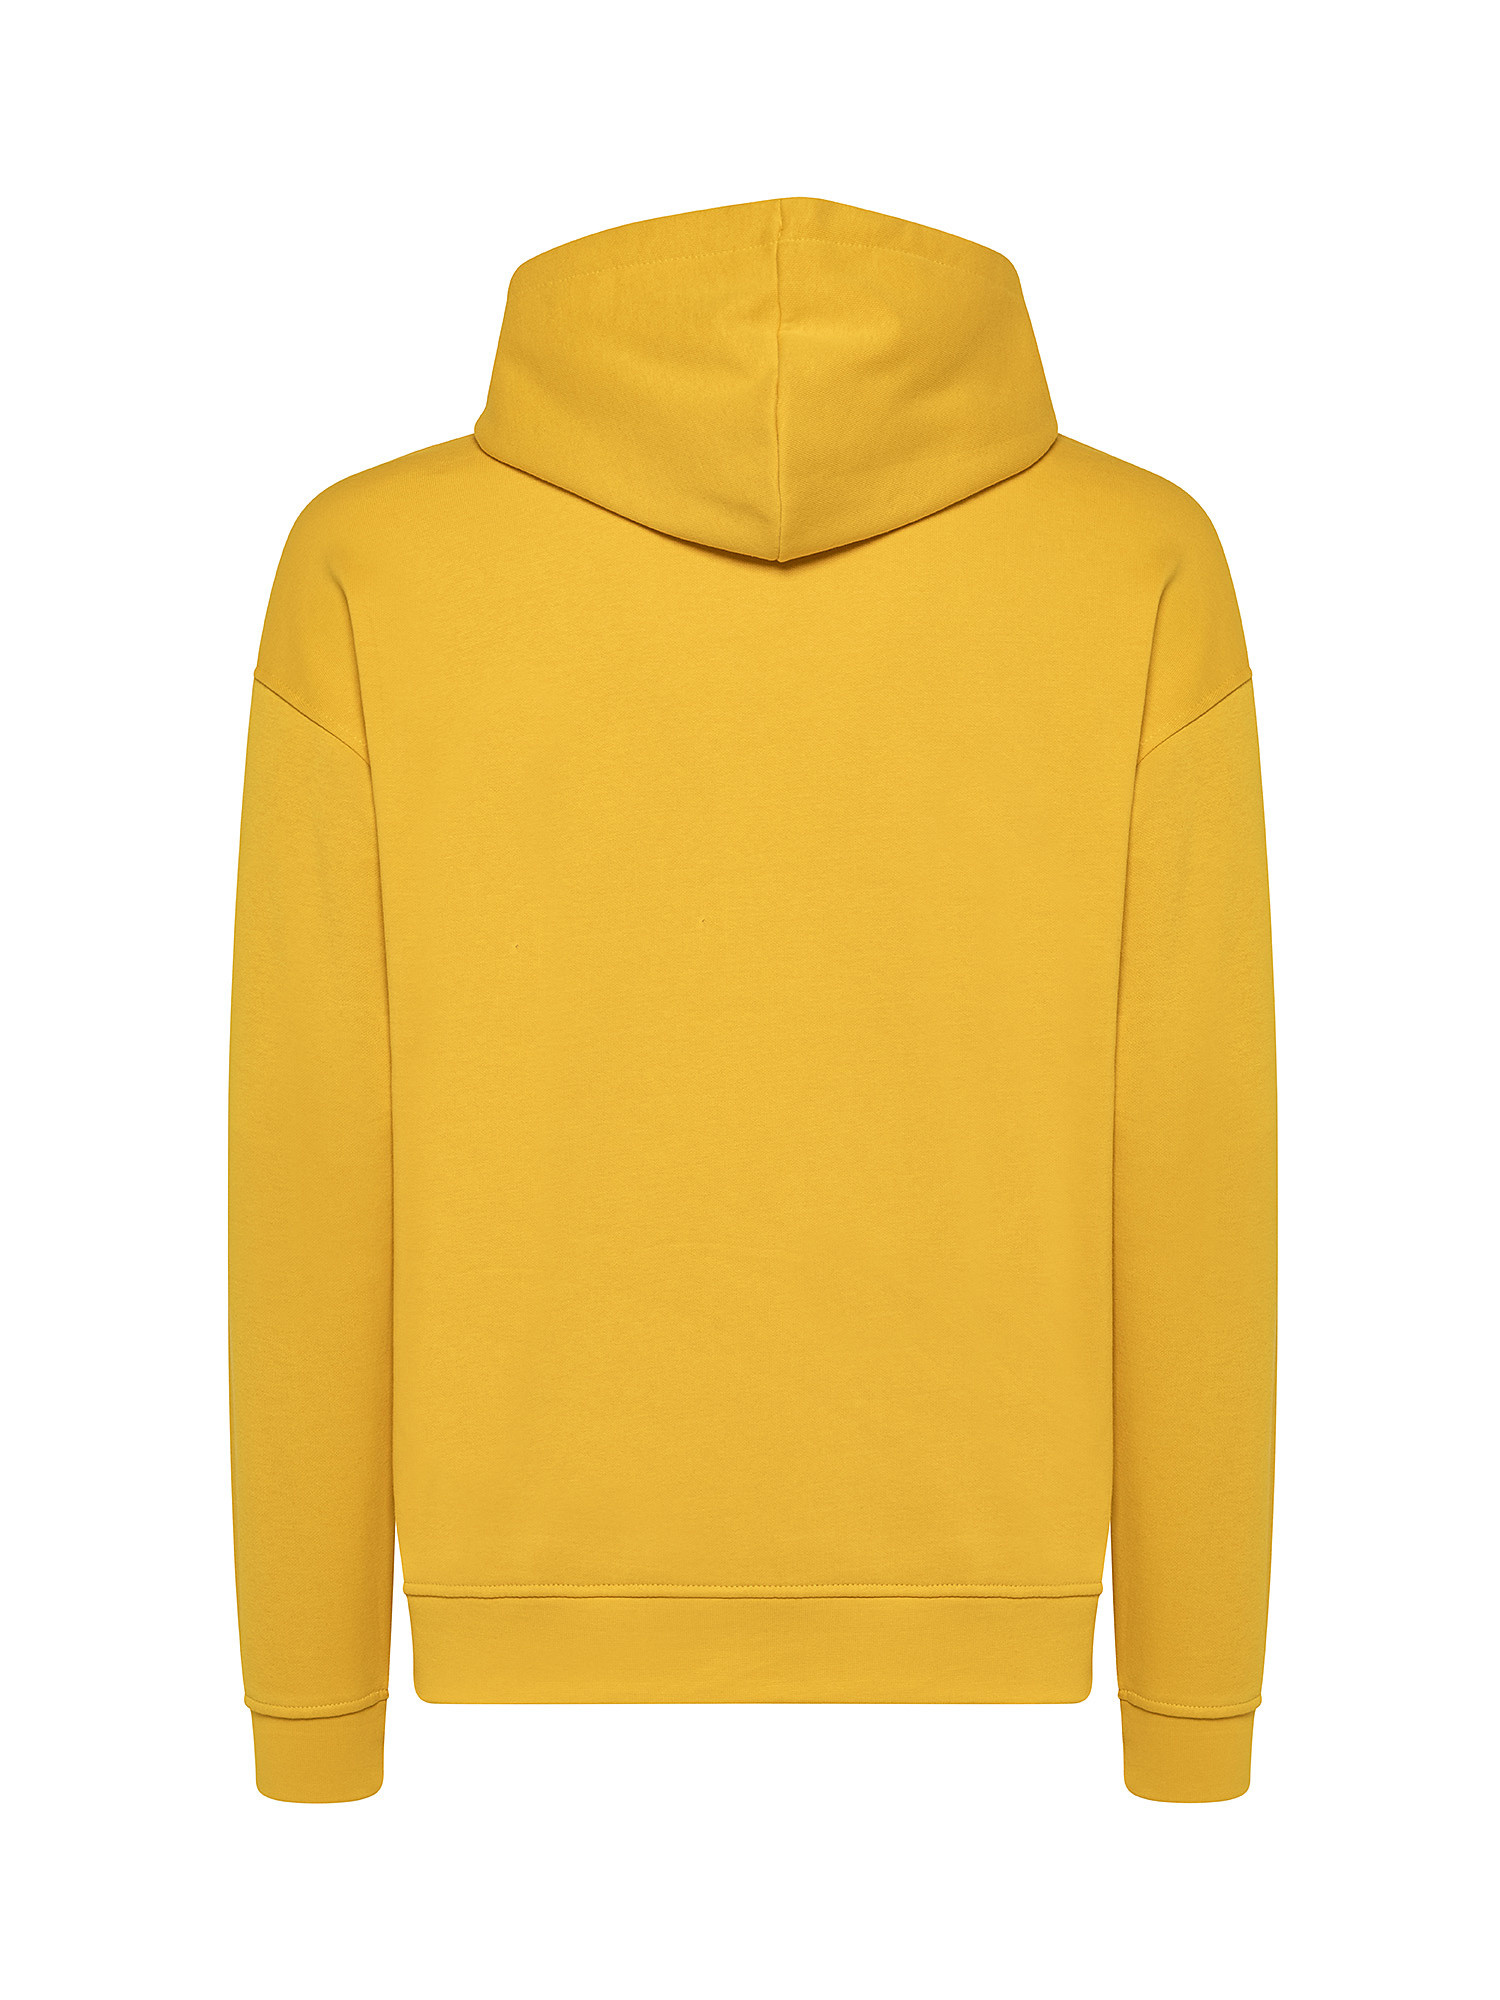 Sweatshirt with hood and long sleeves, Yellow, large image number 1